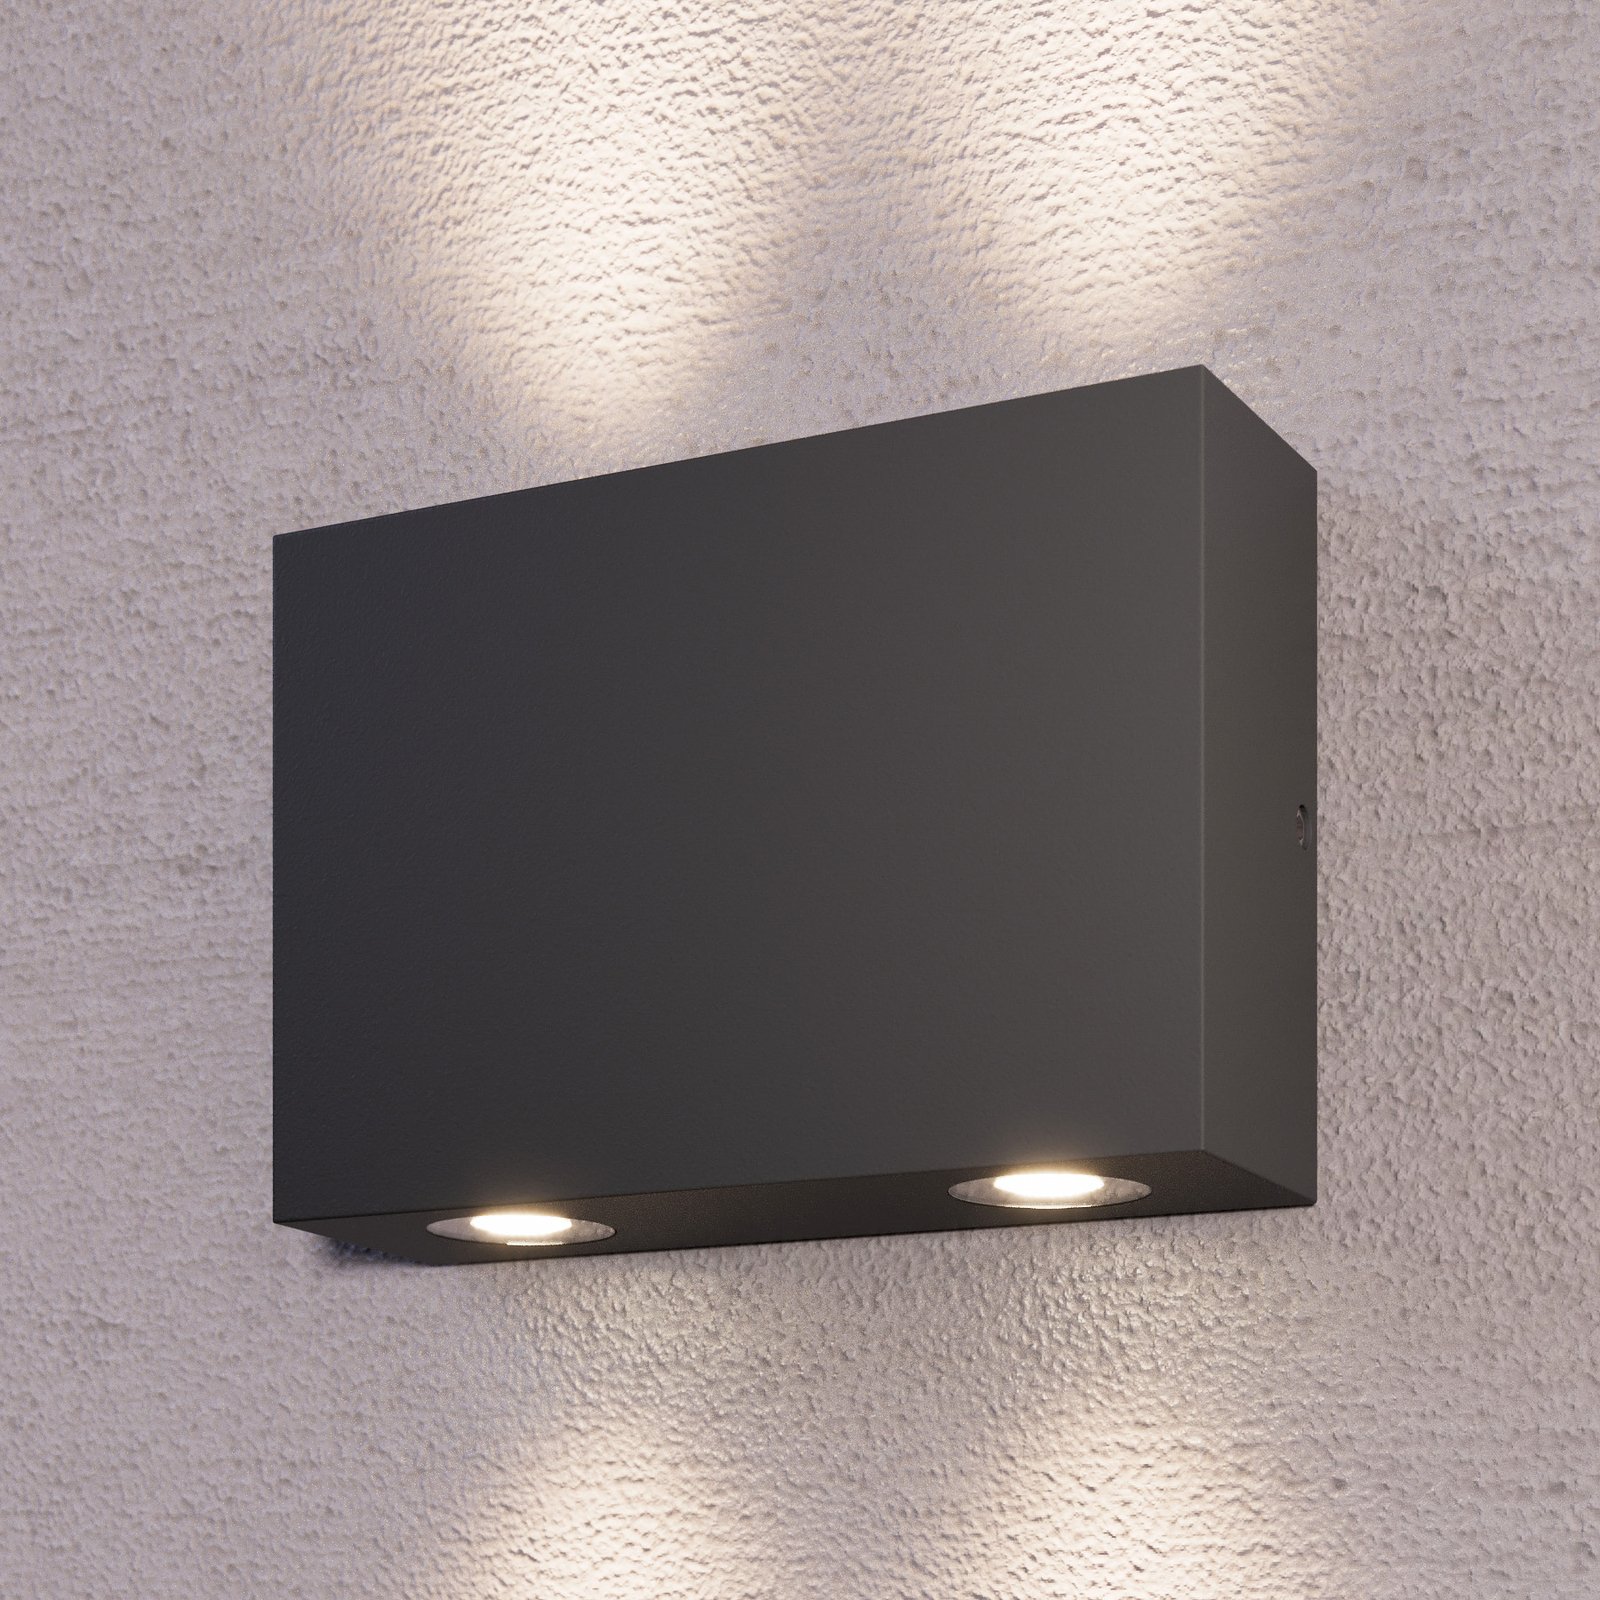 Rectangular outdoor wall light Henor with 4 LEDs